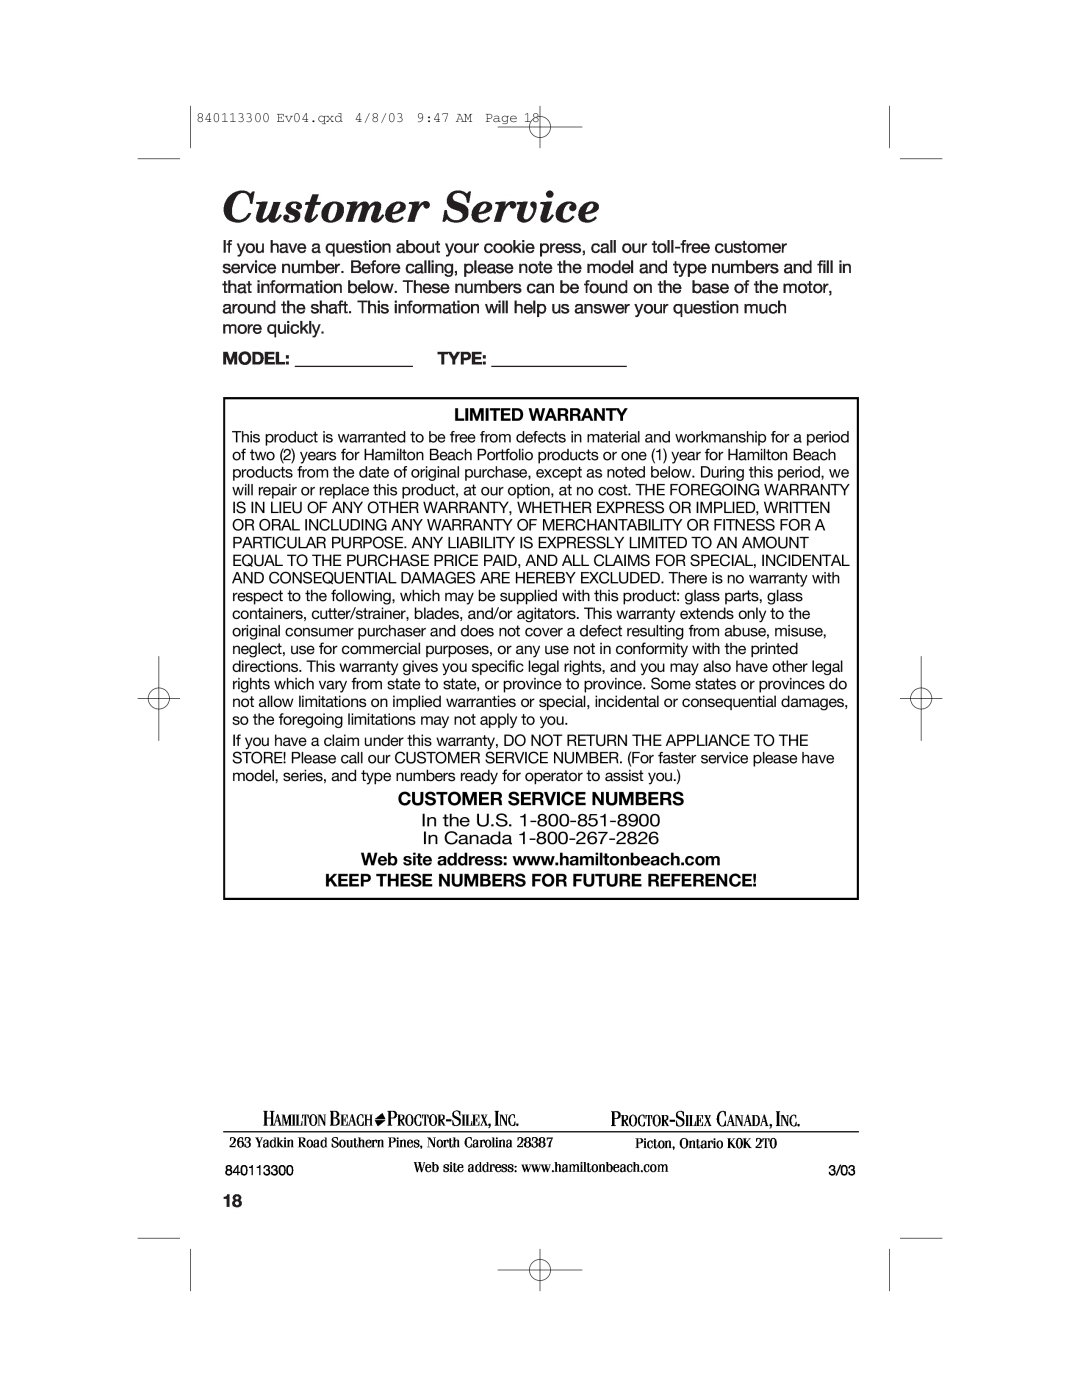 Hamilton Beach 840113300 Customer Service Numbers, Model Type Limited Warranty, Proctor -Silex , Inc 